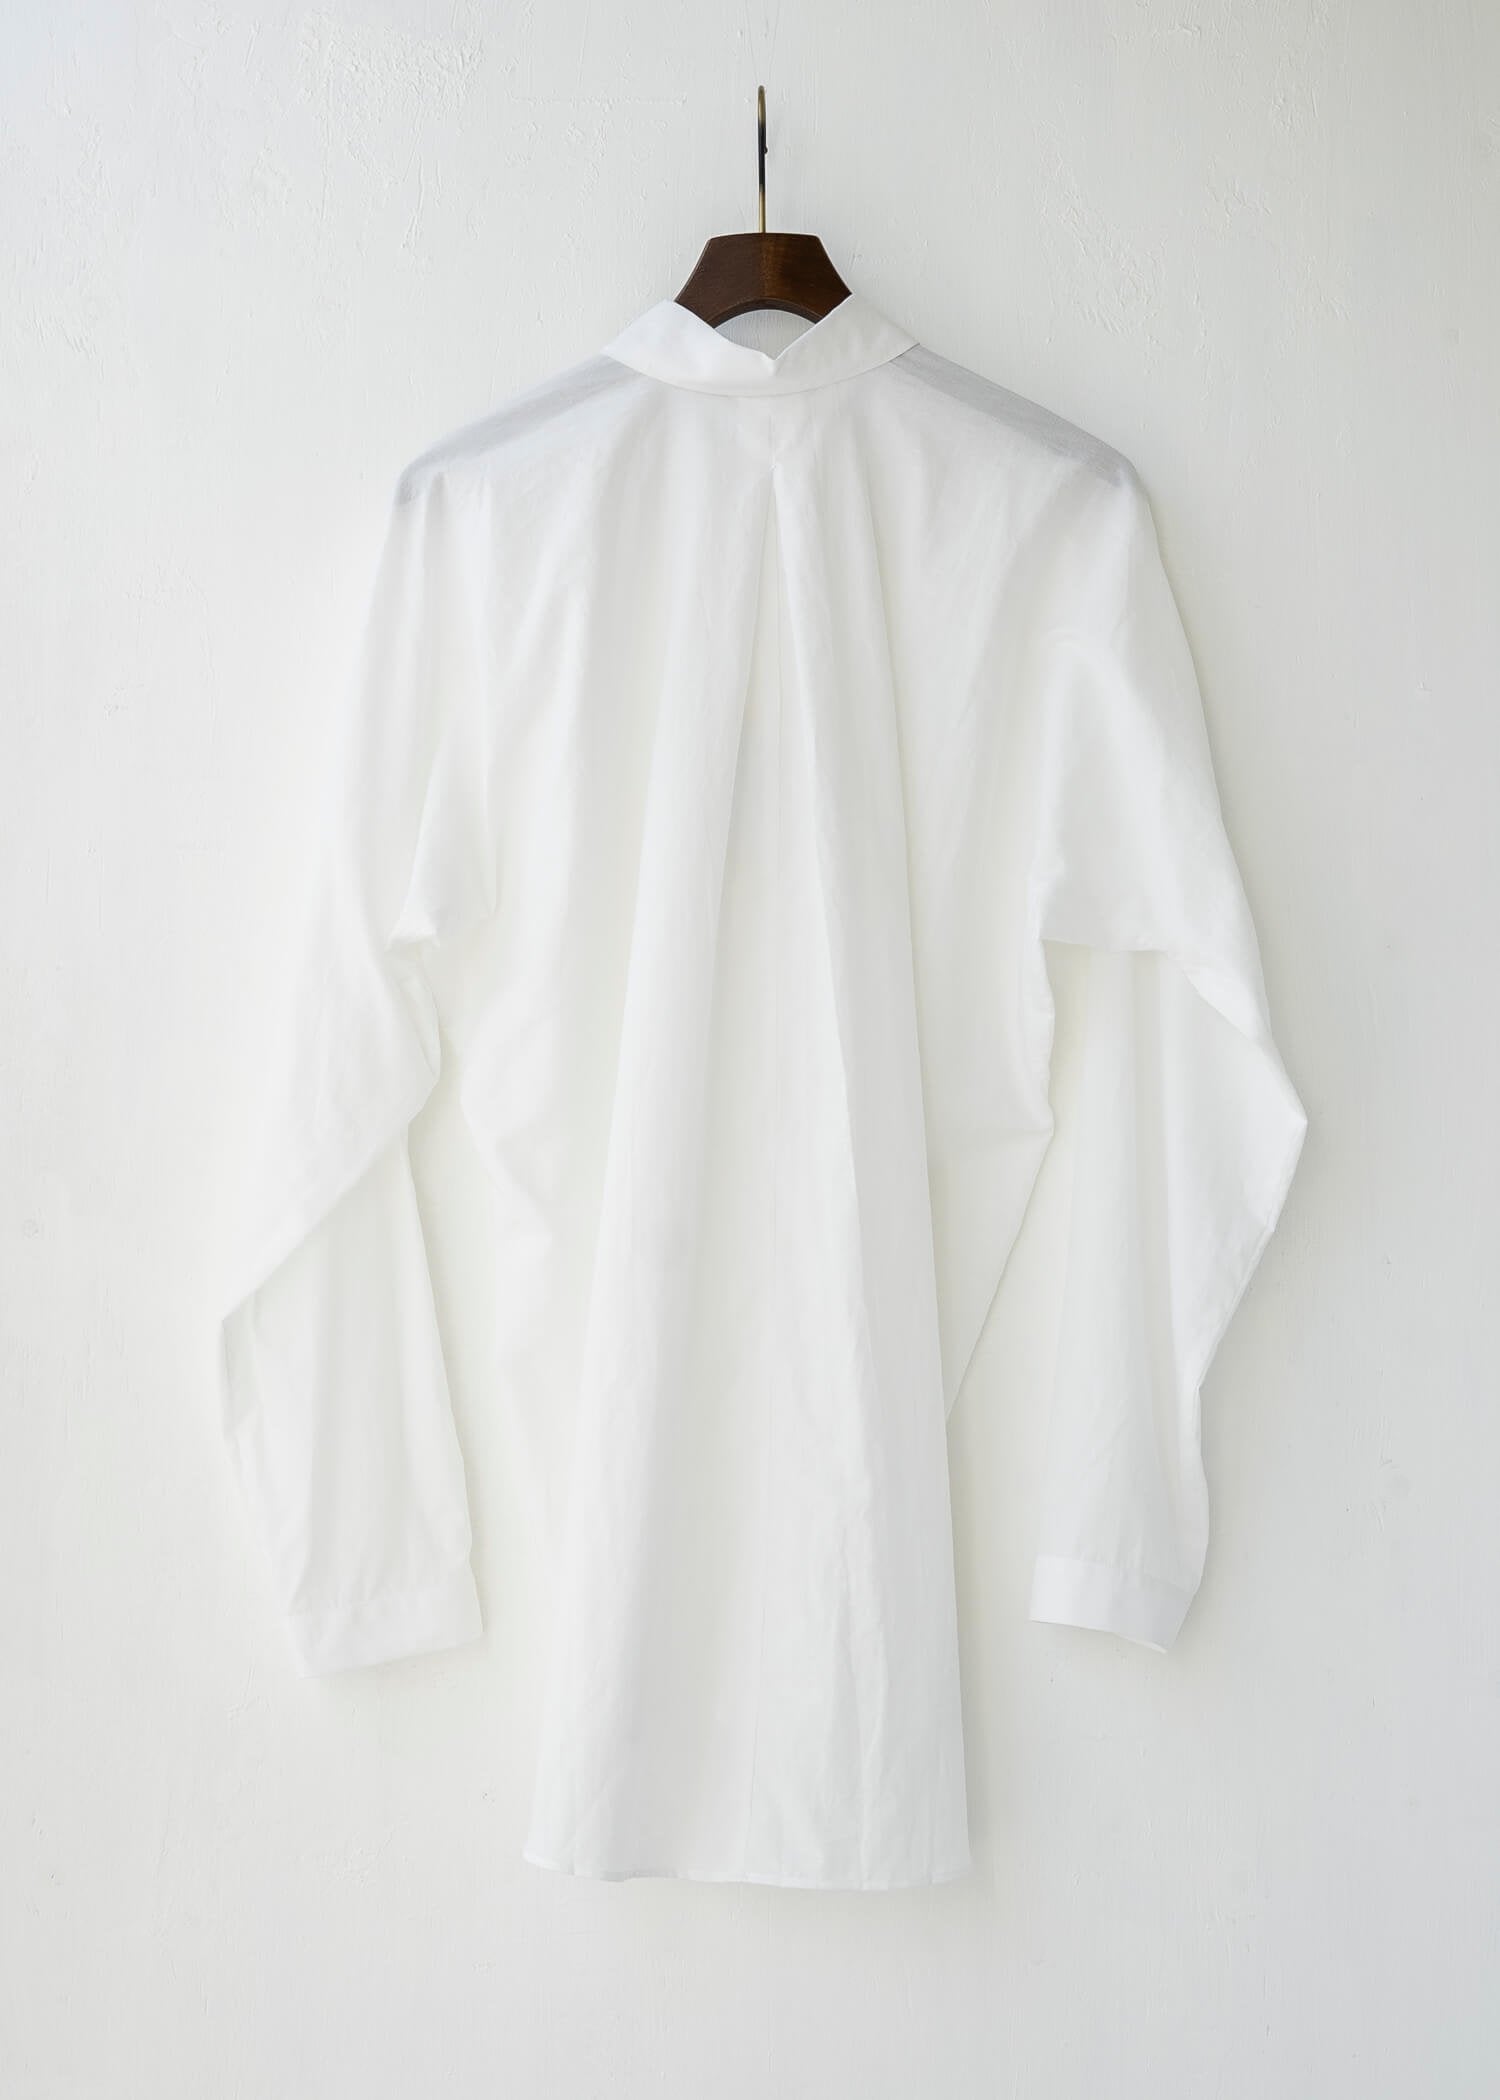 JAN-JAN VAN ESSCHE / "SHIRT#77" 宽松衬衫 / OFF-WHITE / CO LI TYPEWRITTER